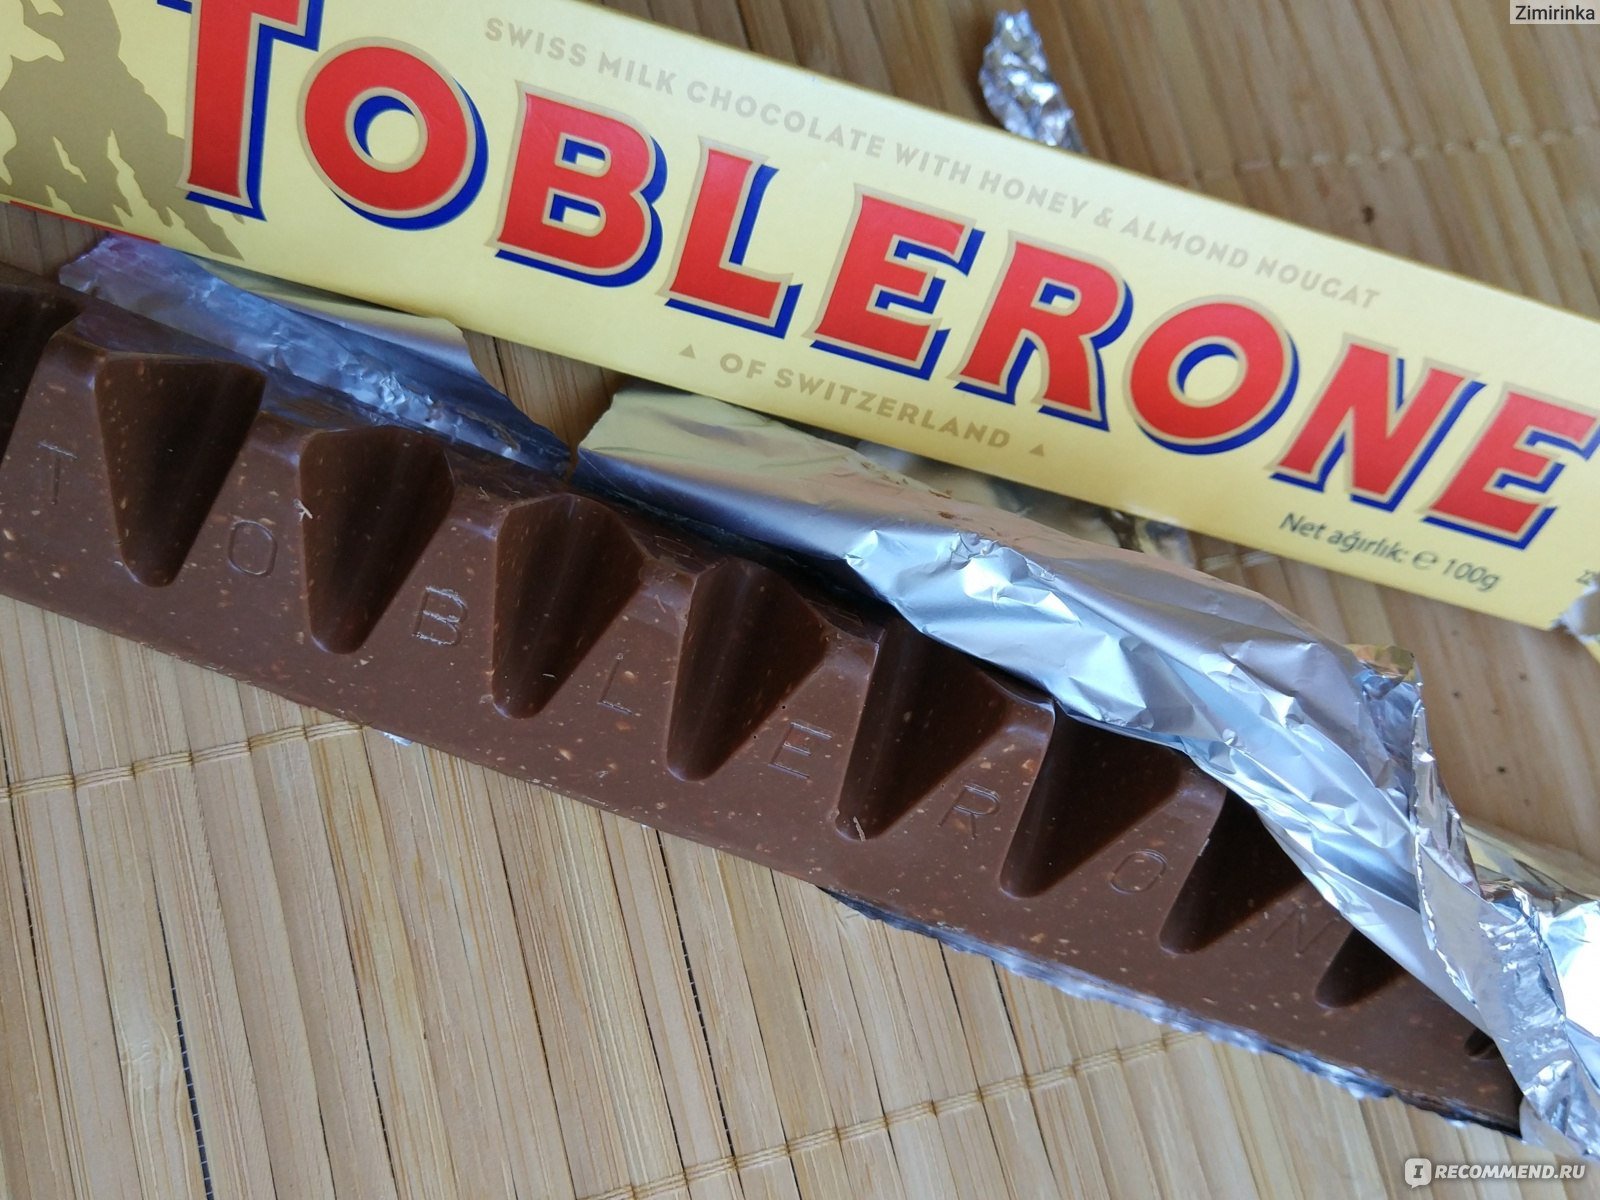 Шоколад toblerone купить. Треугольный шоколад Toblerone. Швейцарский шоколад Тоблерон. Шоколад Toblerone молочный. Тоблерон шоколад большой.